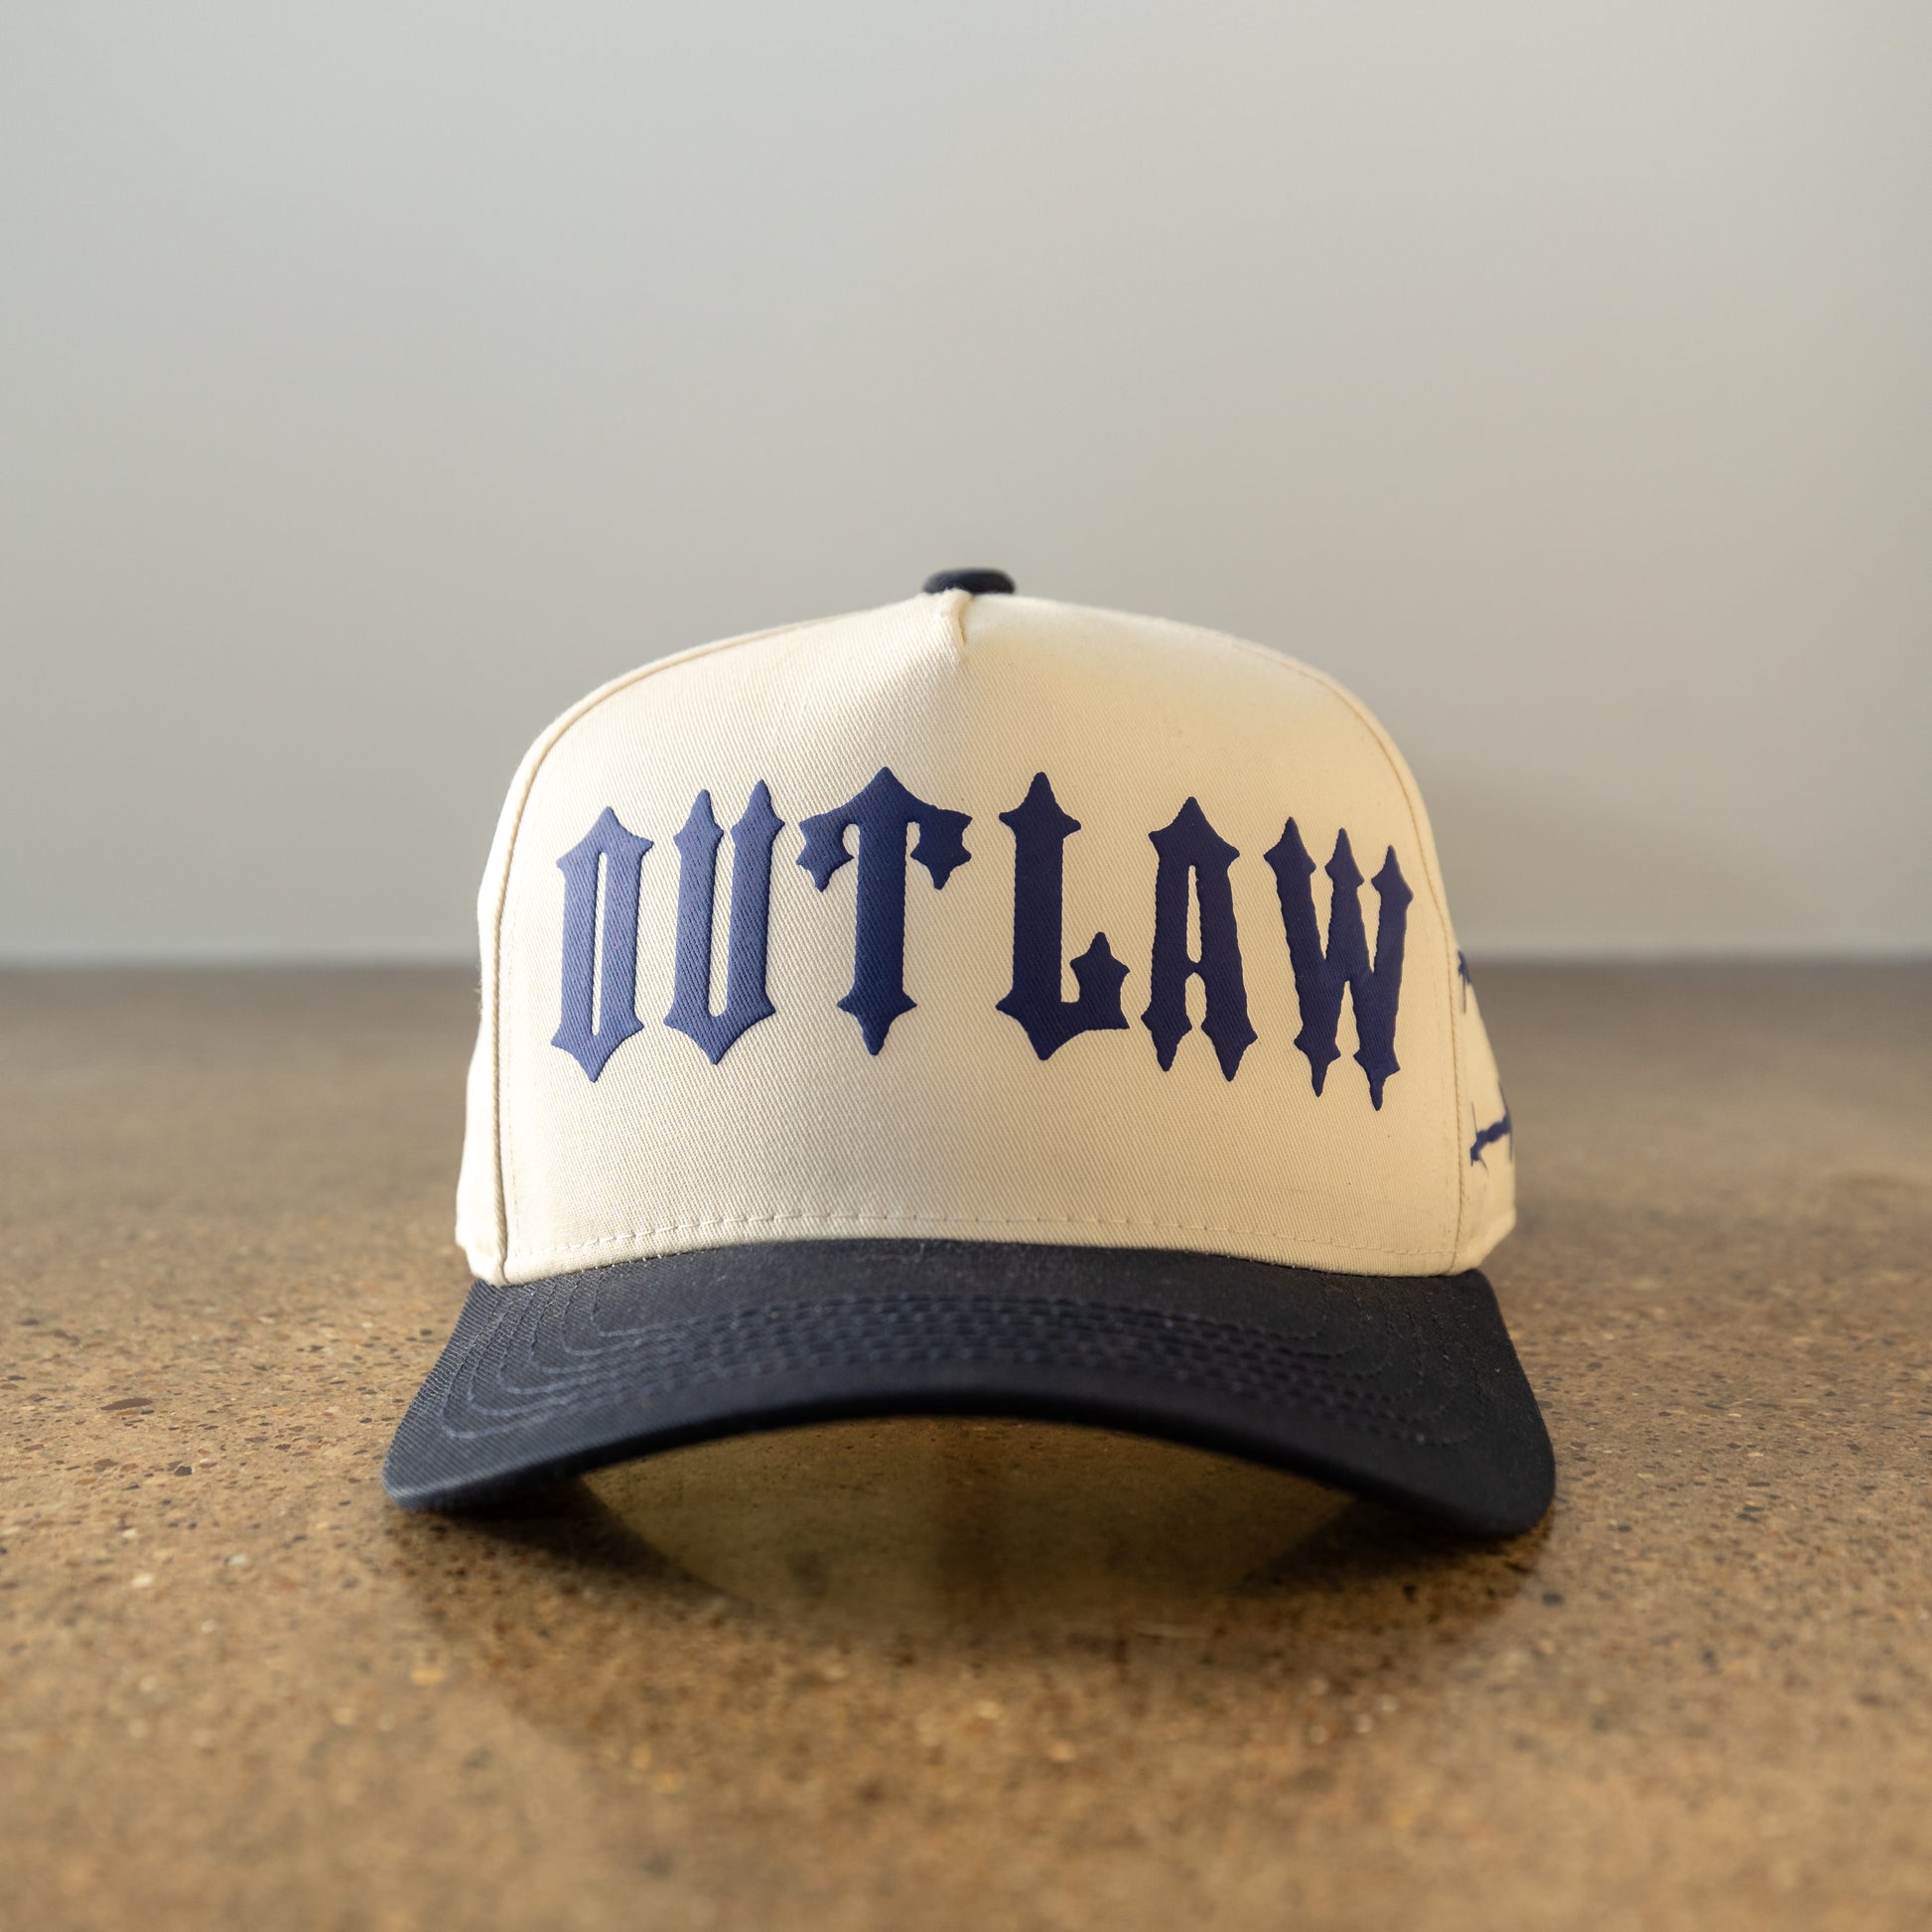 OUTLAW BASEBALL CAP - TAN + NAVY